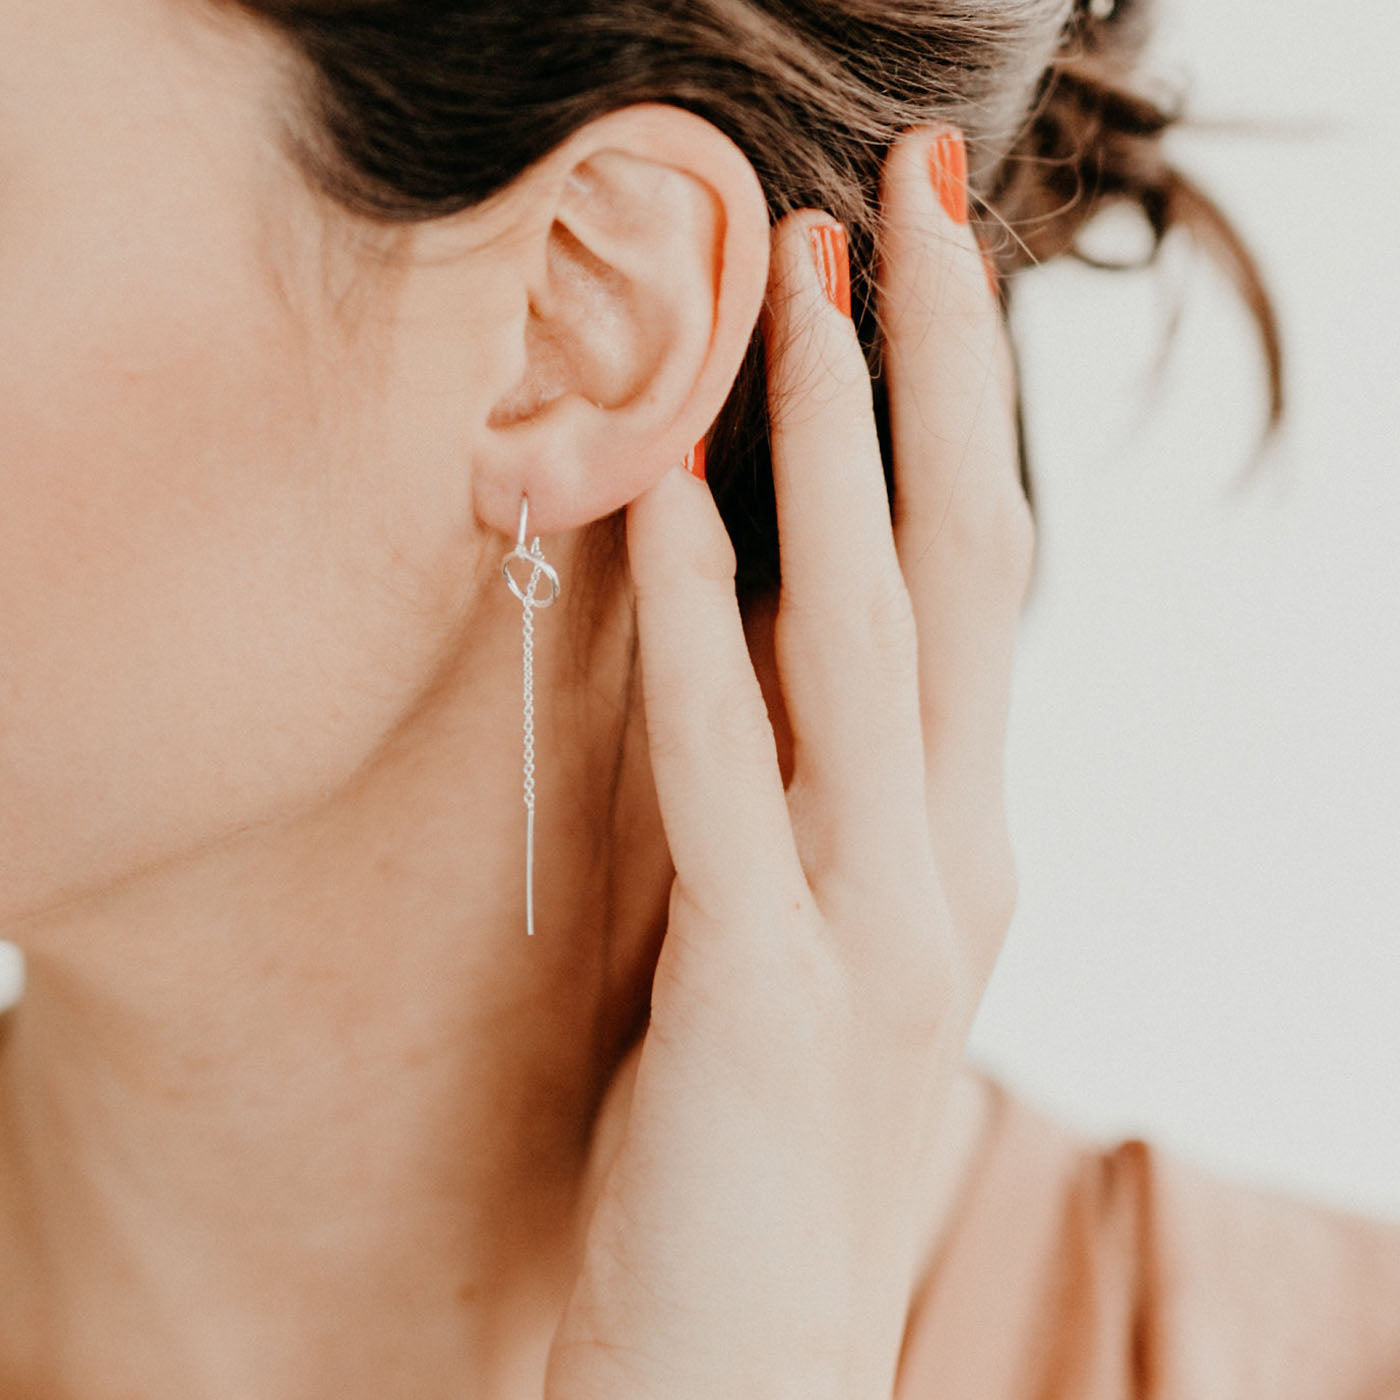 Tiny Loop Thread Earrings - Favor Jewelry